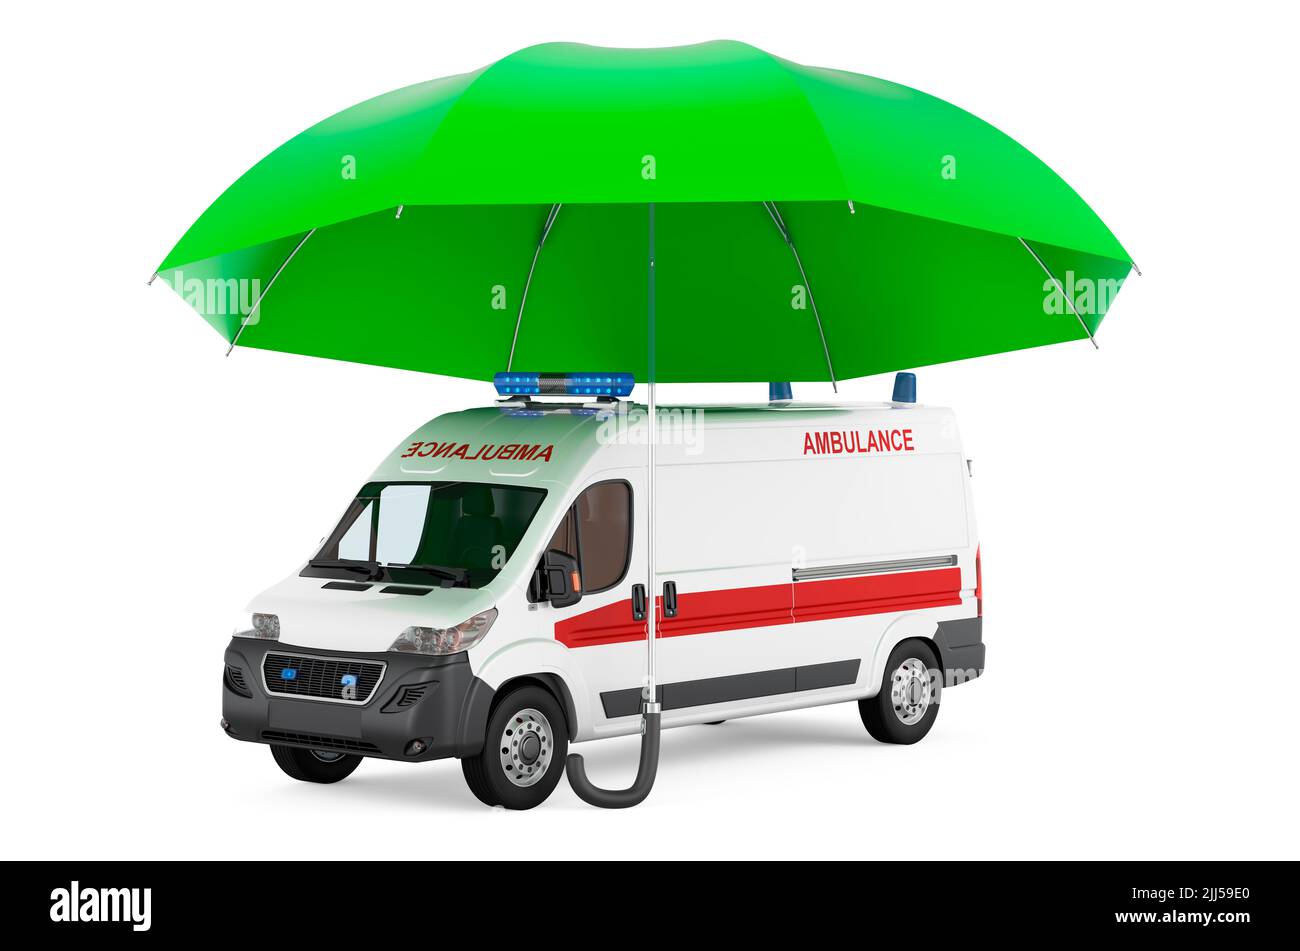 Ambulance van under umbrella, 3D rendering isolated on white background Stock Photo